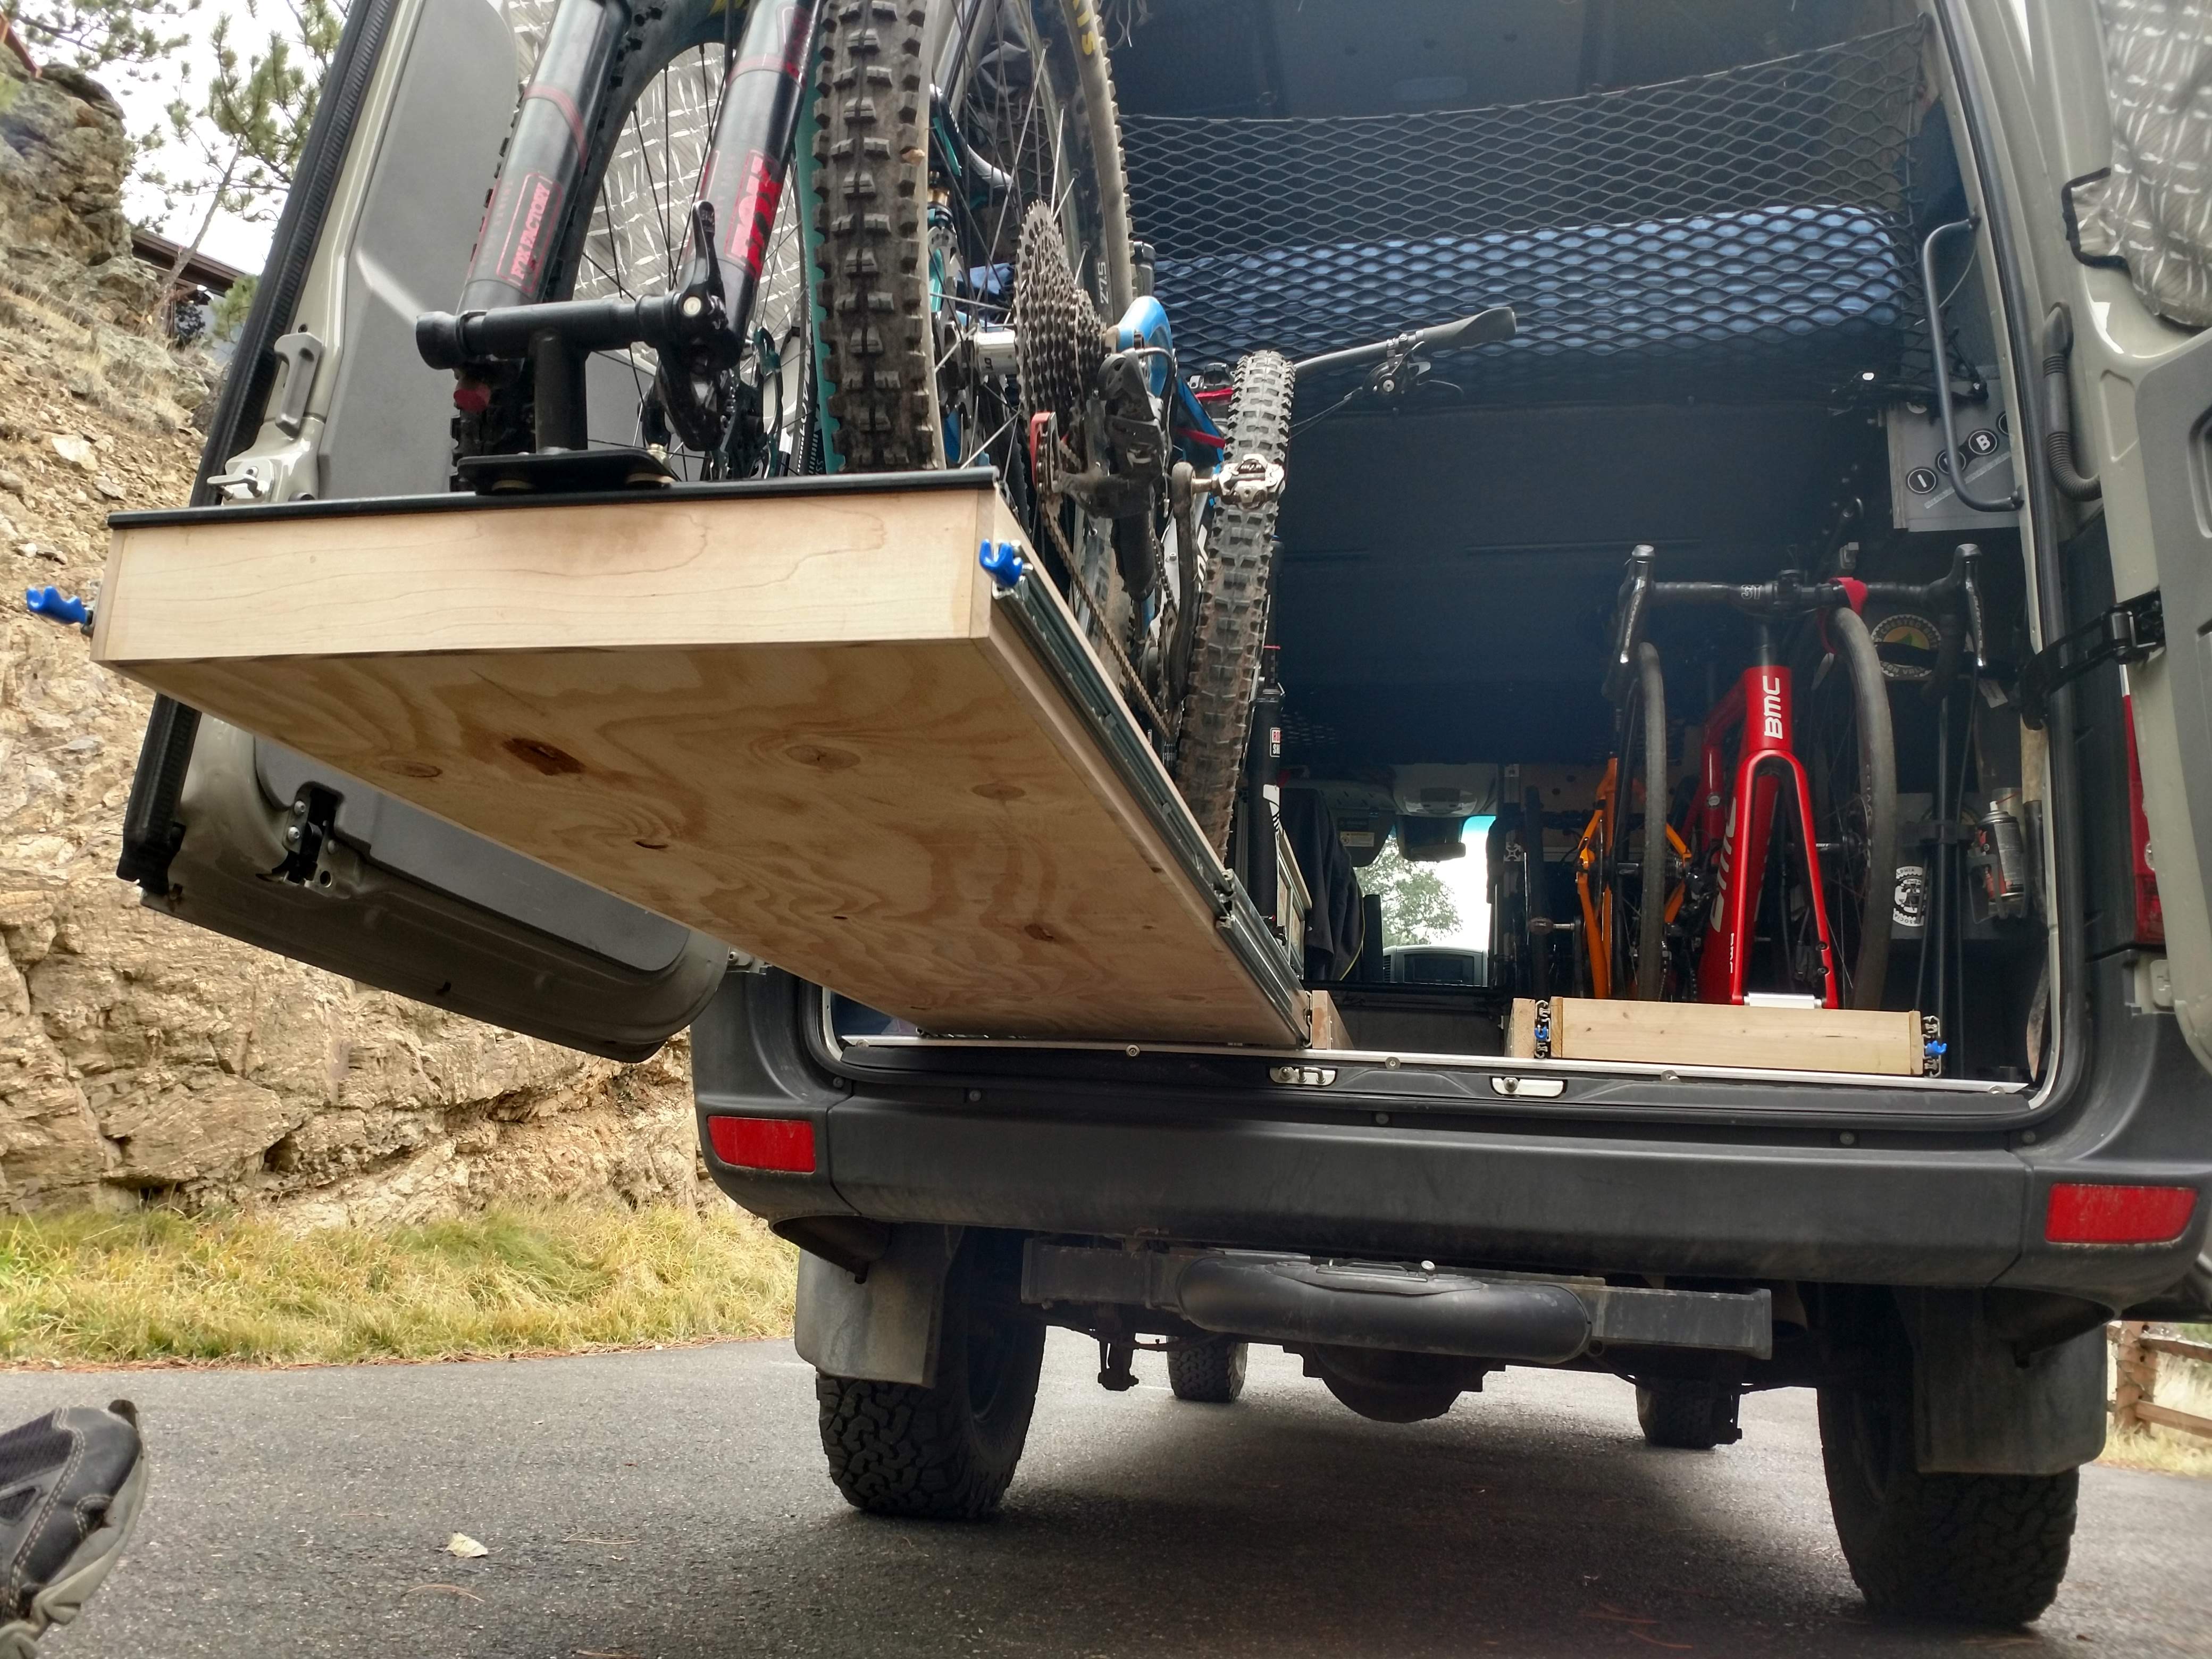 sliding bike storage